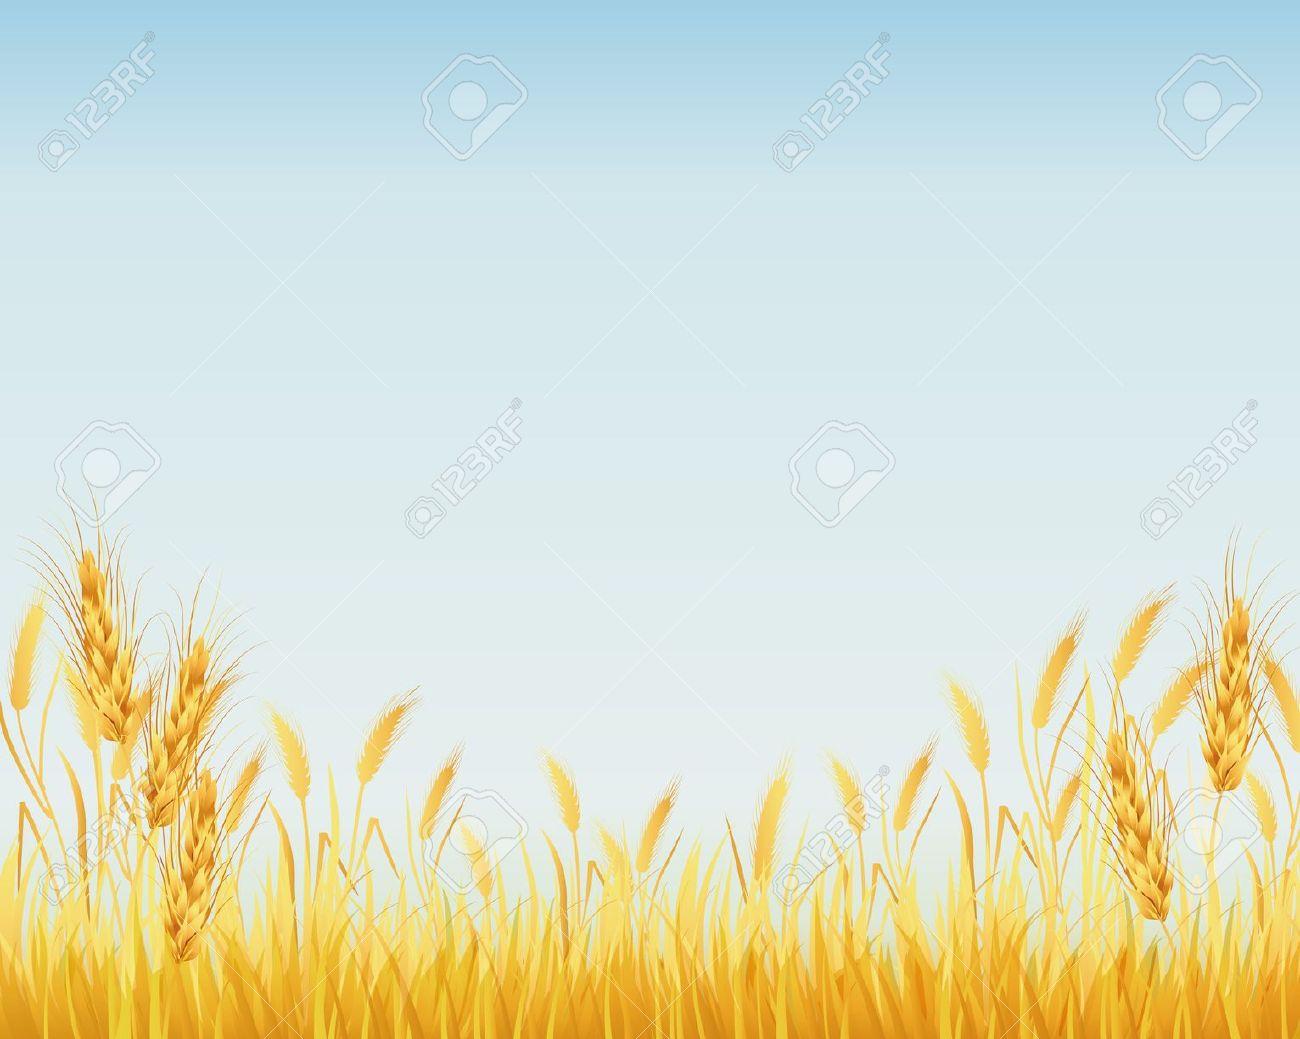 field clipart harvest field